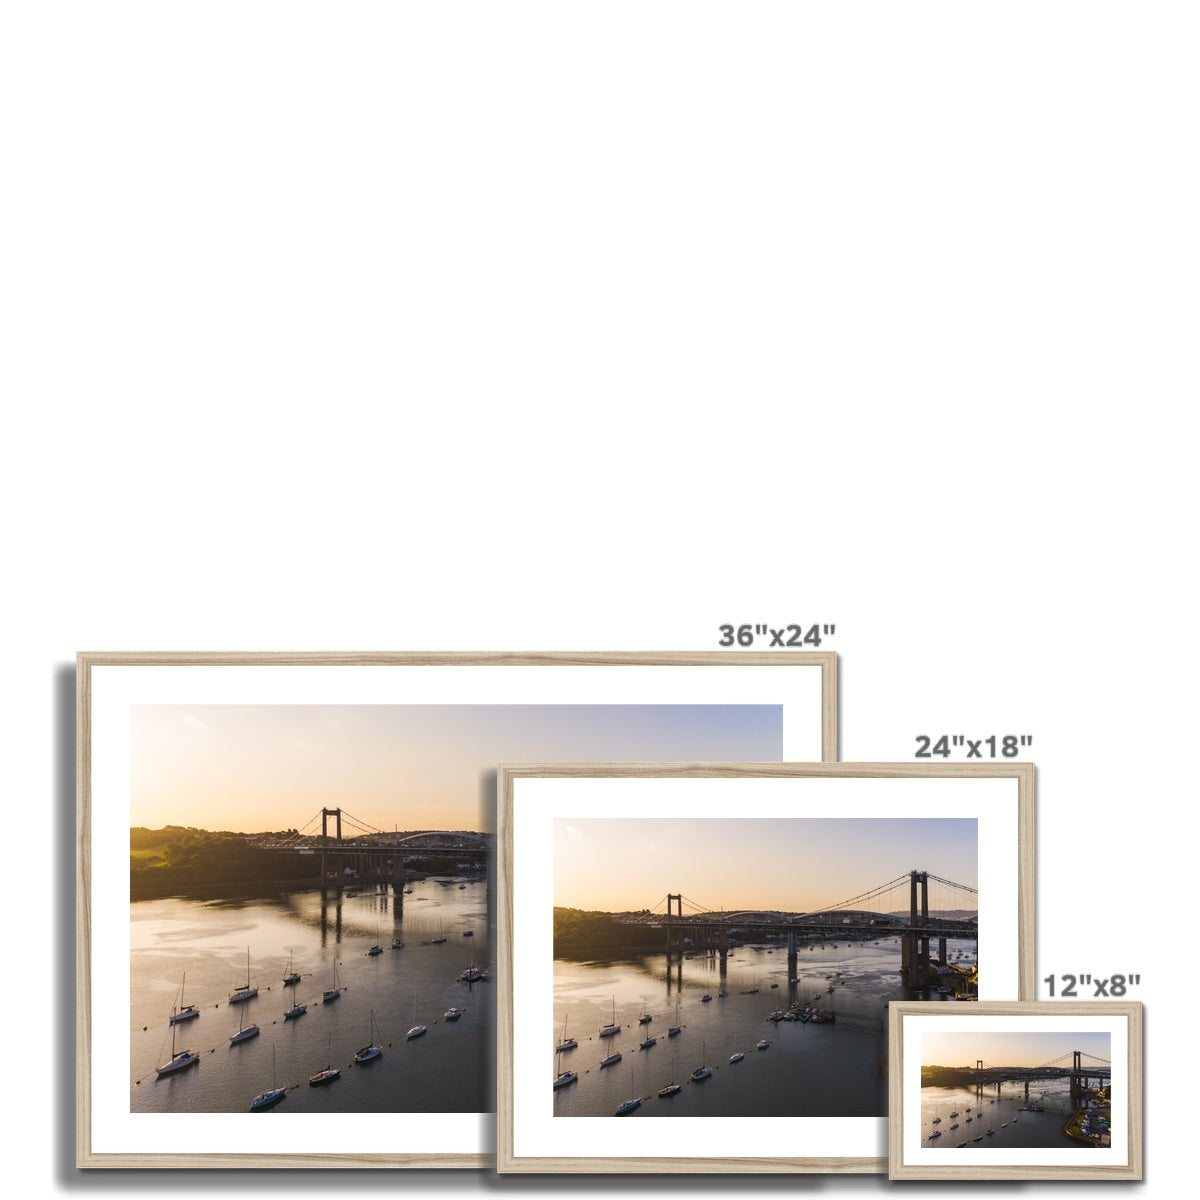 tamar bridge saltash framed photograph